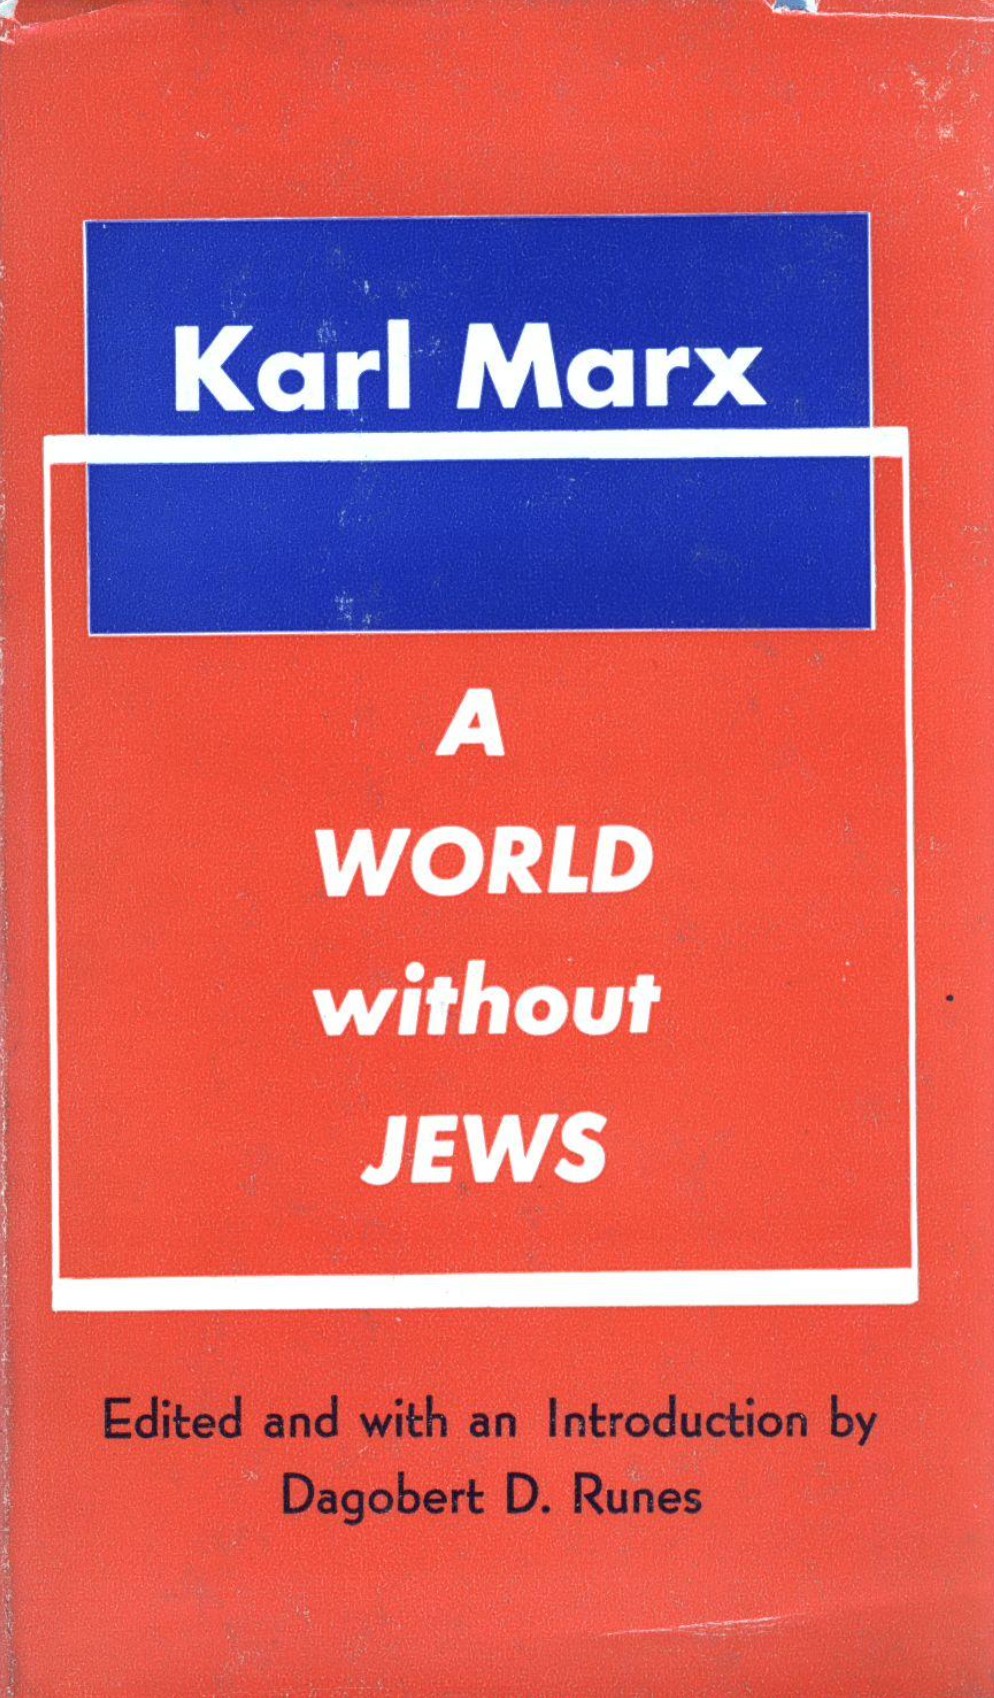 A World Without Jews (1959) by Karl Marx